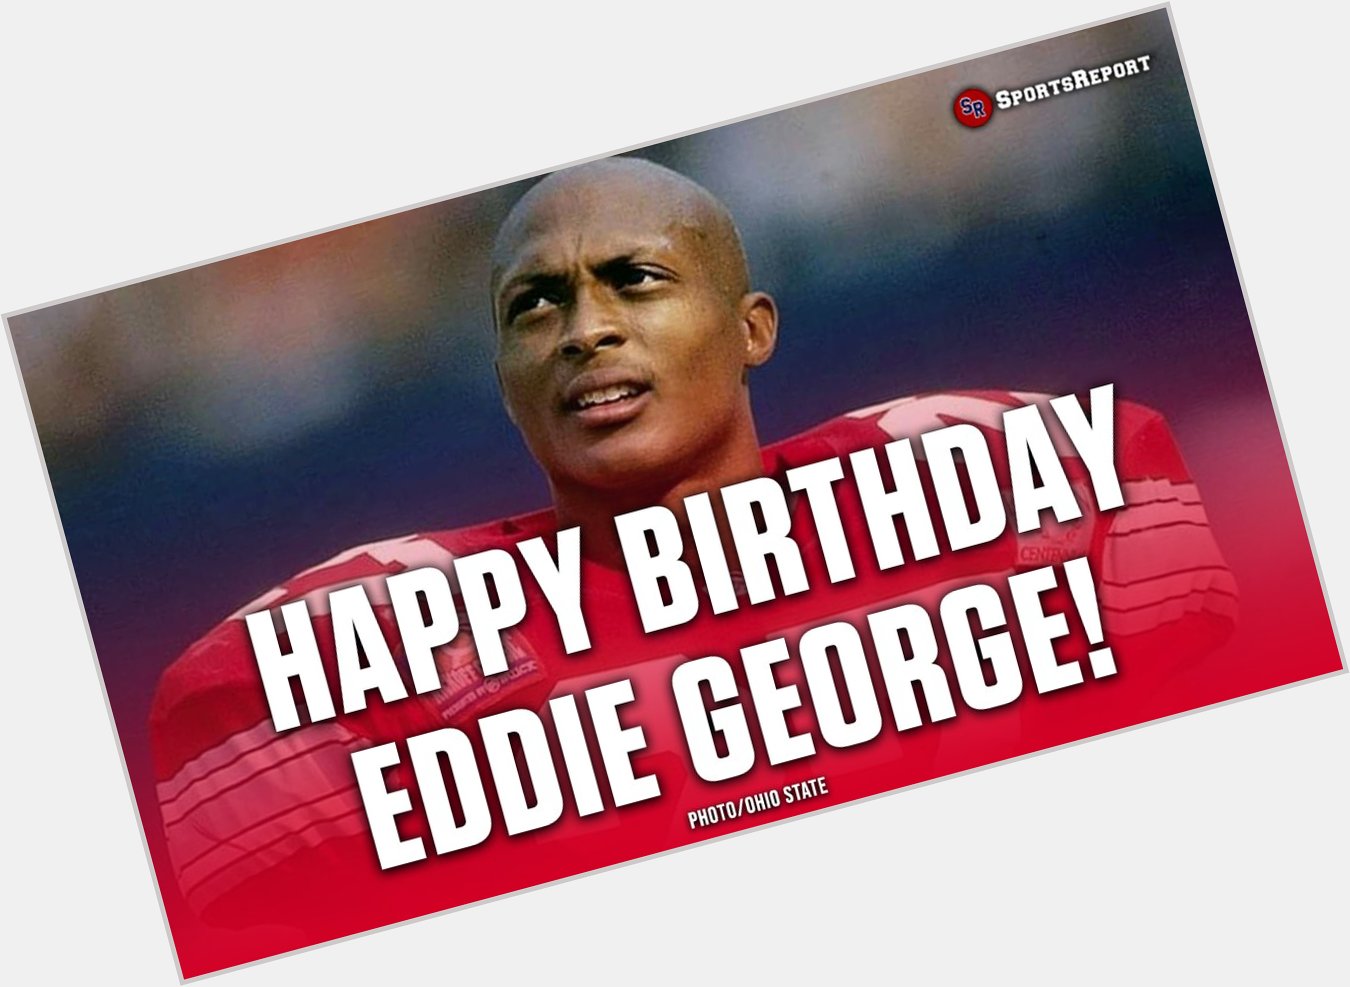  Fans, let\s wish legend Eddie George a Happy Birthday! GO 